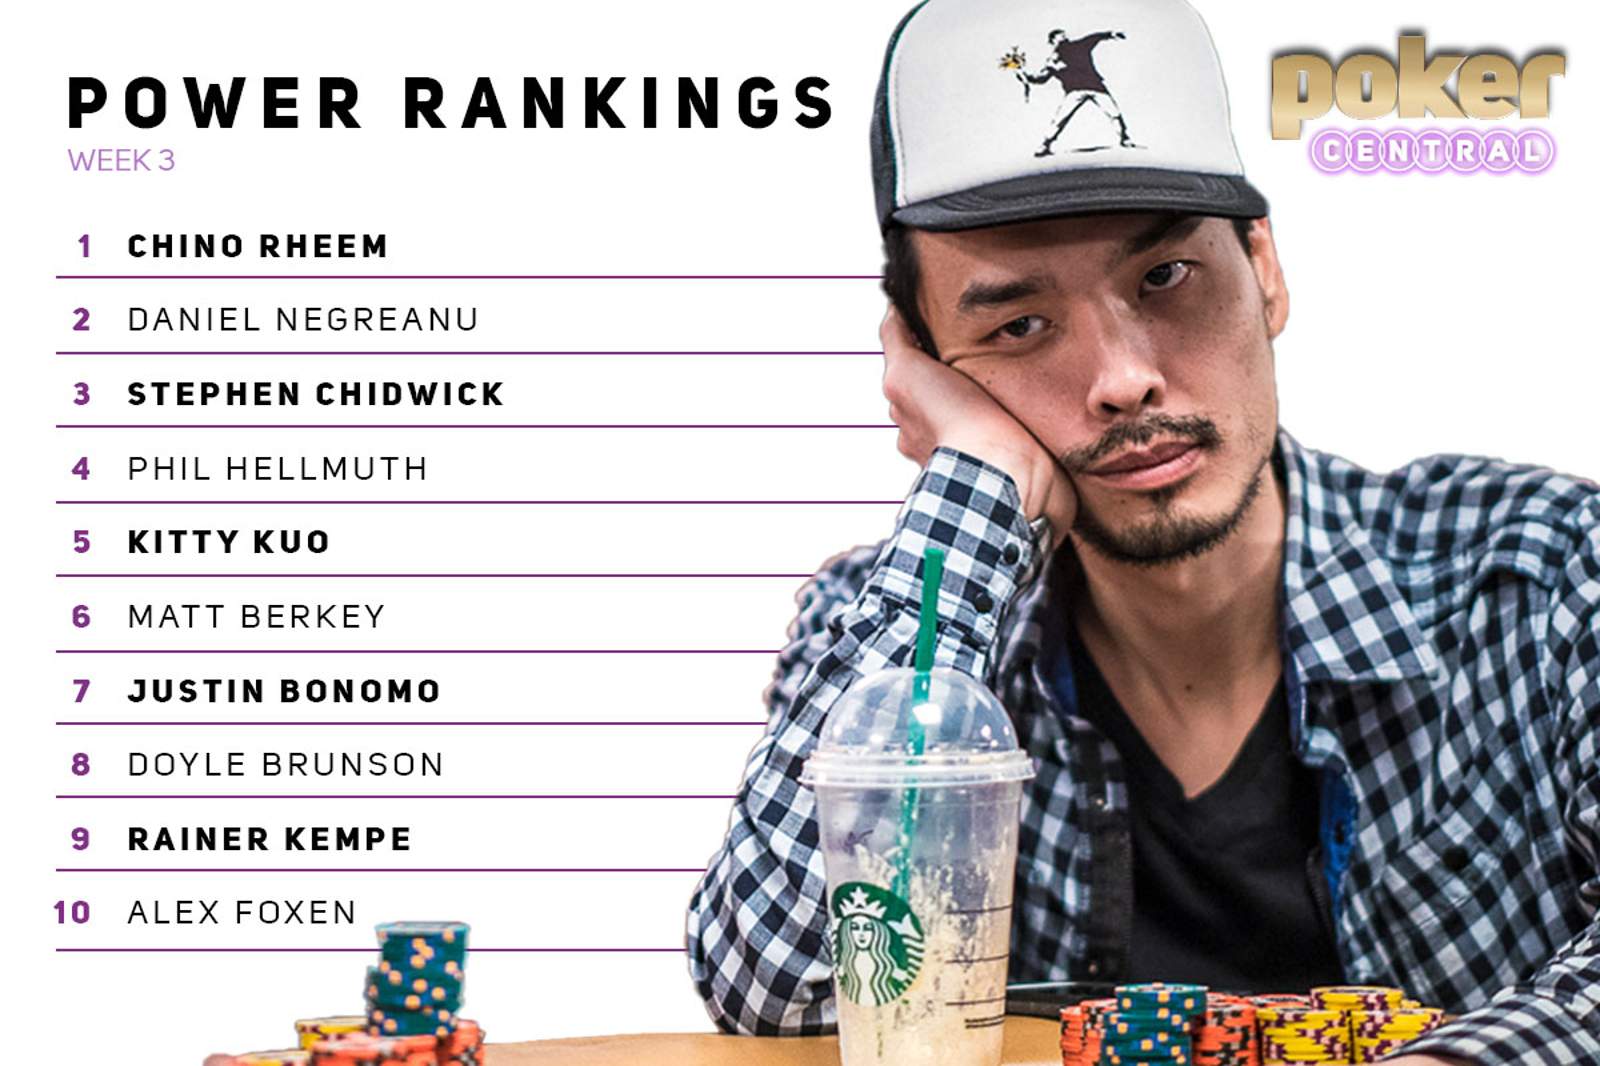 Poker Central Power Rankings: Chino Rheem Reigns Supreme